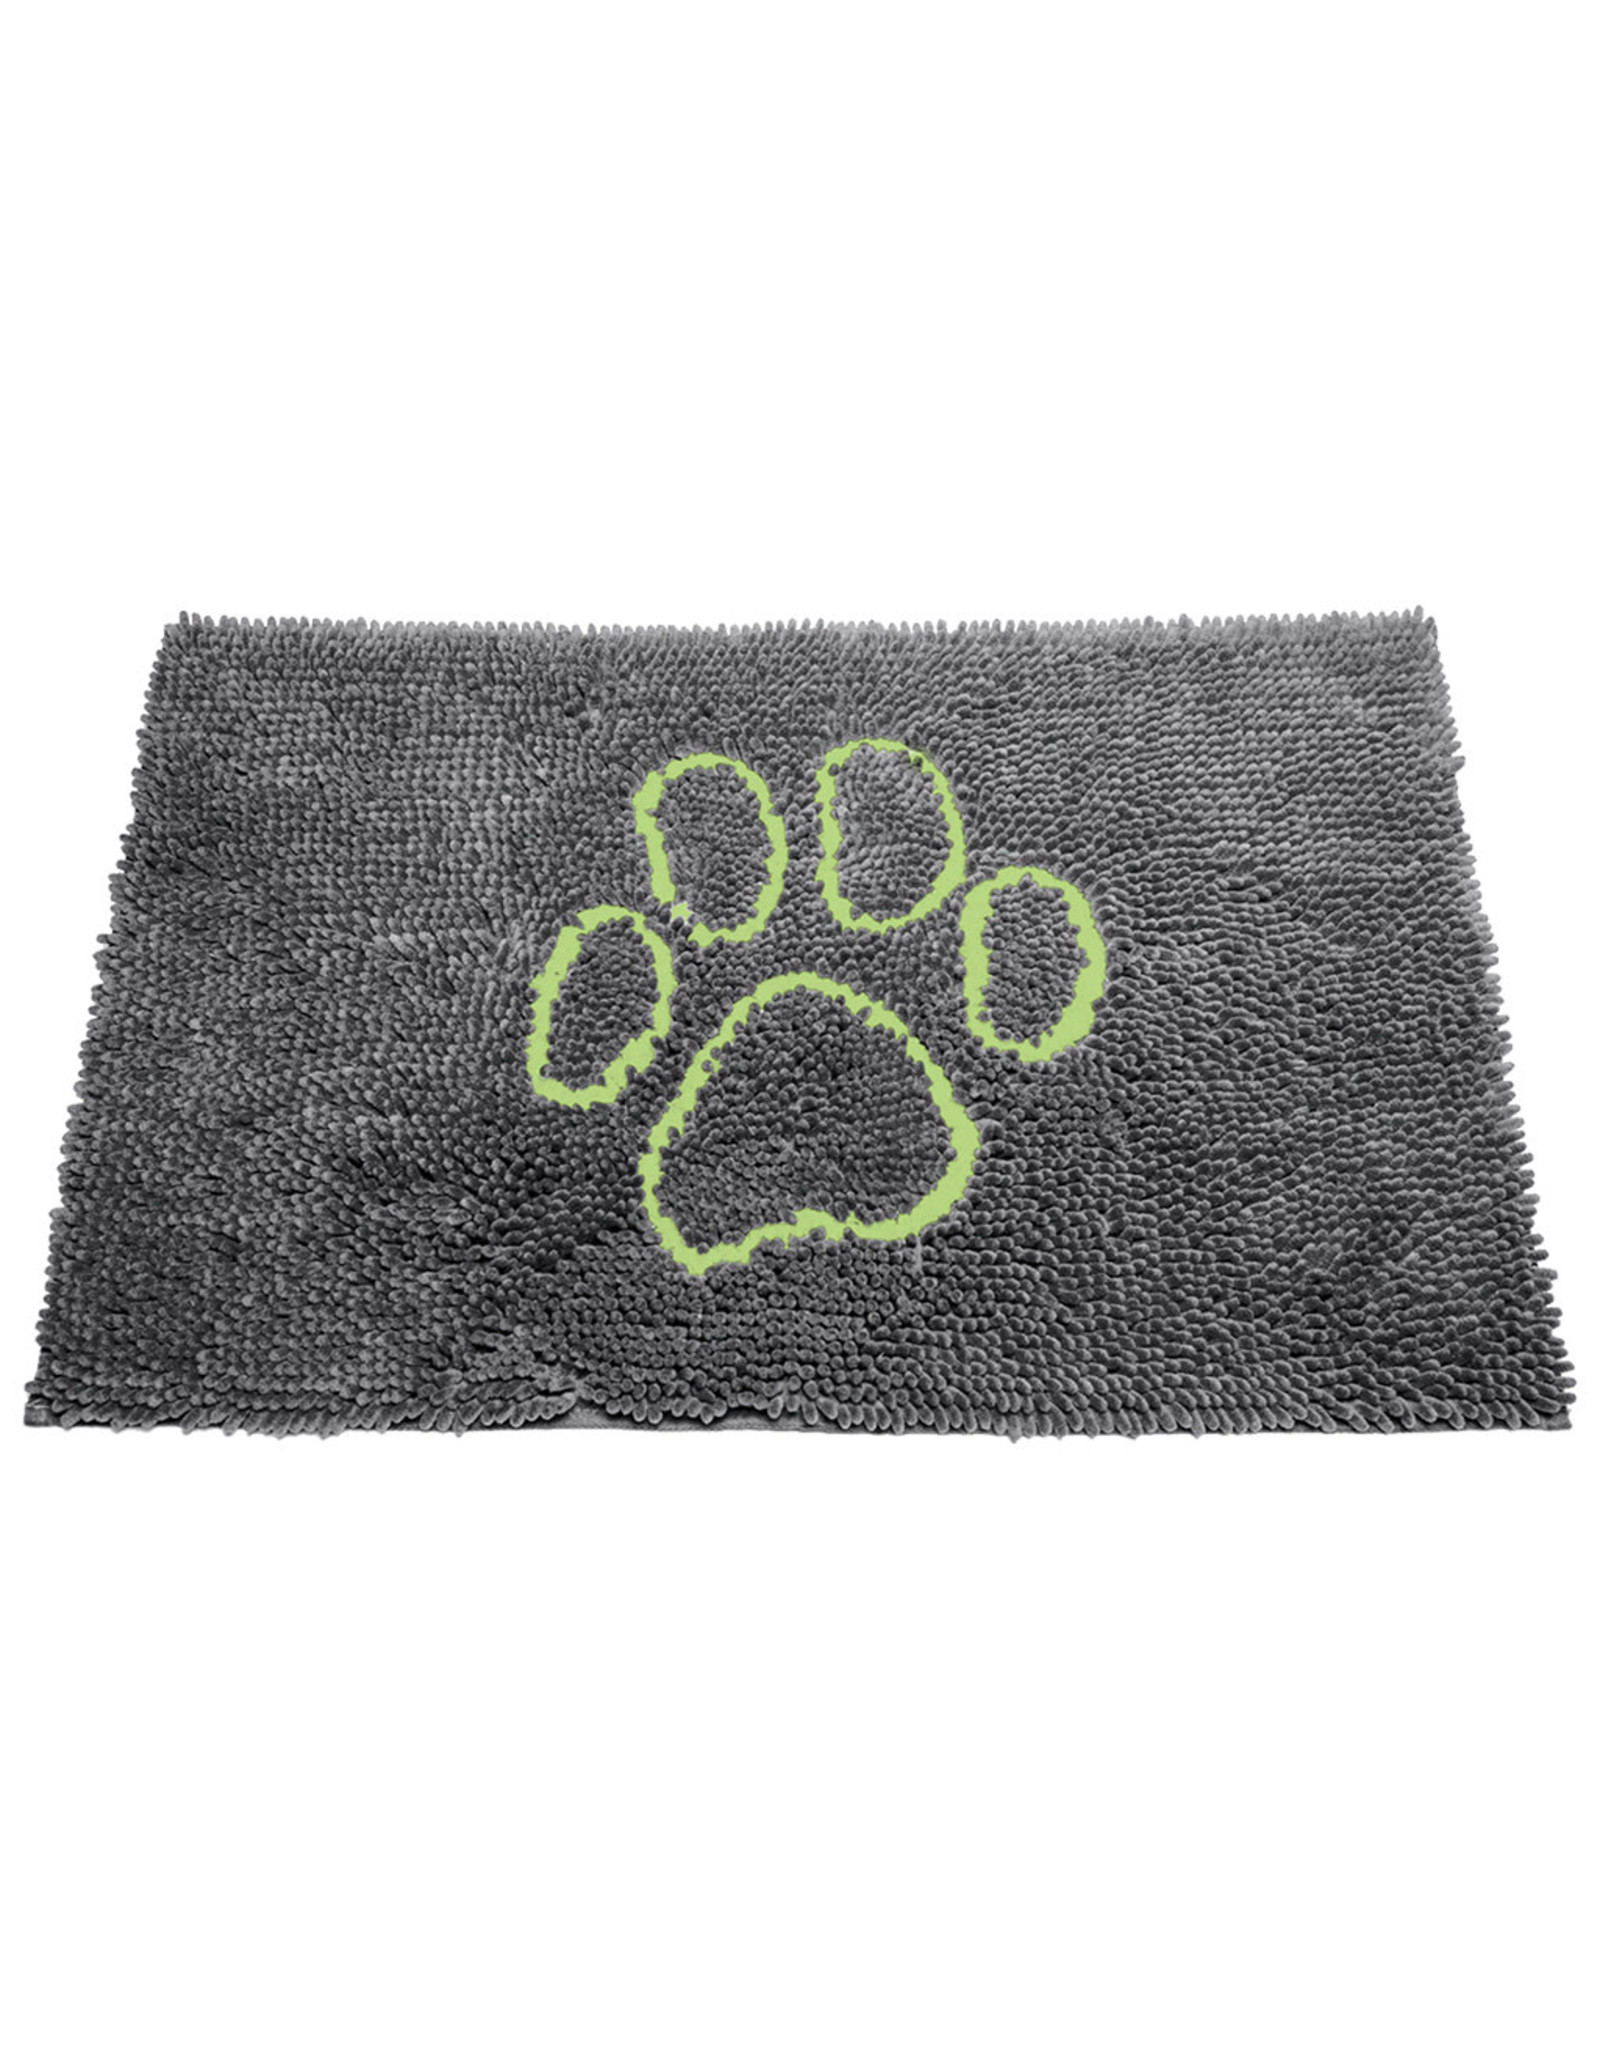 Dog Gone Smart Dirty Dog Doormat ~~